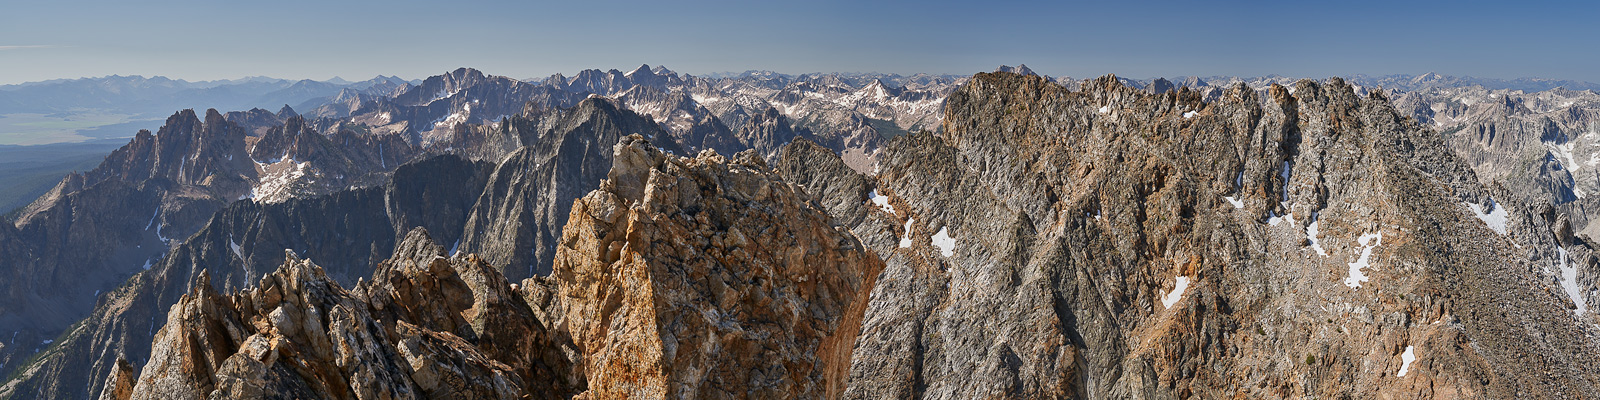 Thompson Peak Panorama